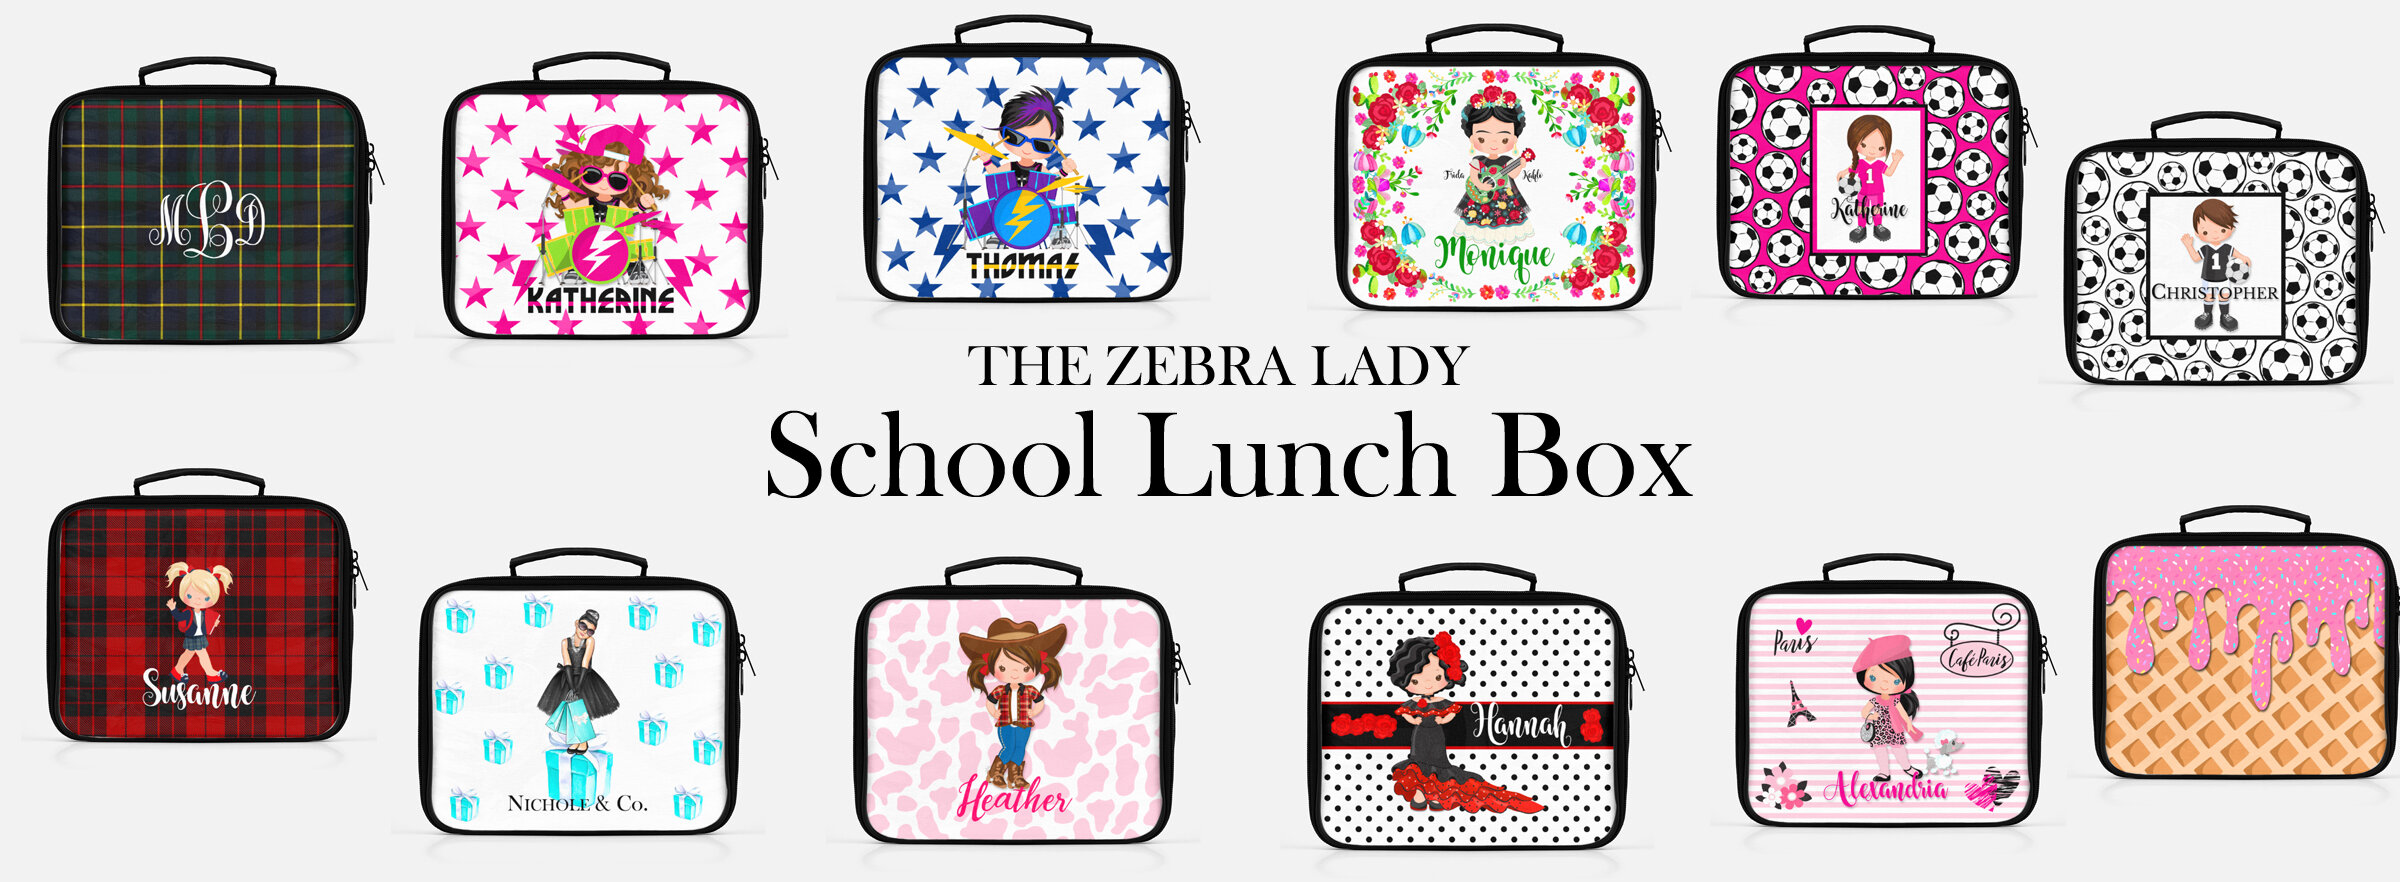 the zebra lady lunch box july 2020.jpg